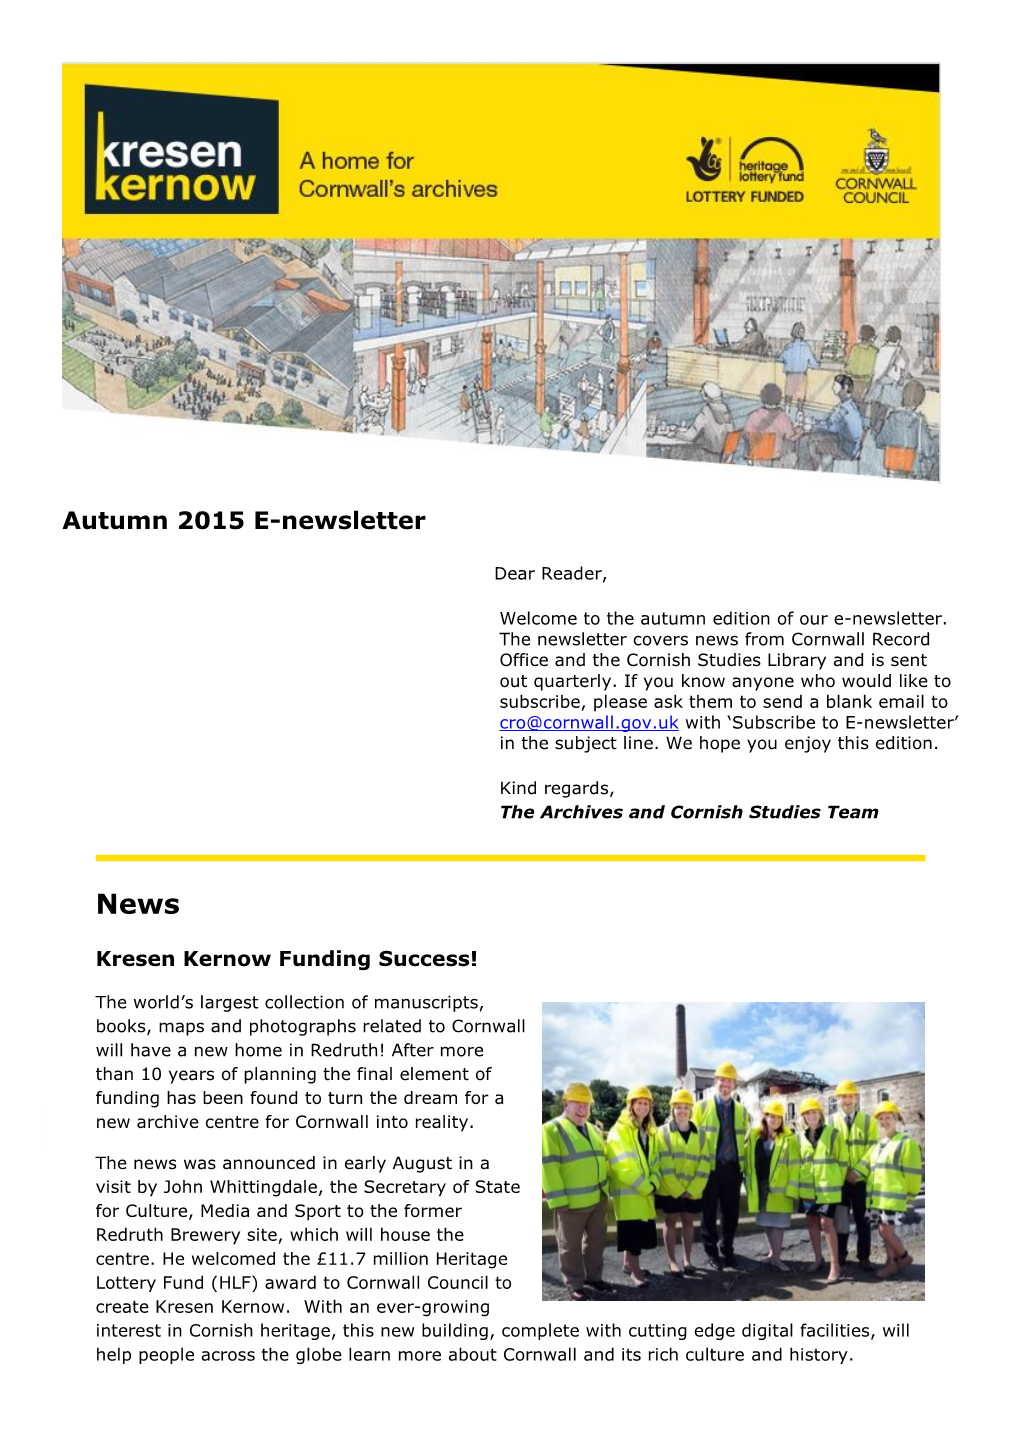 Autumn 2015 E-Newsletter